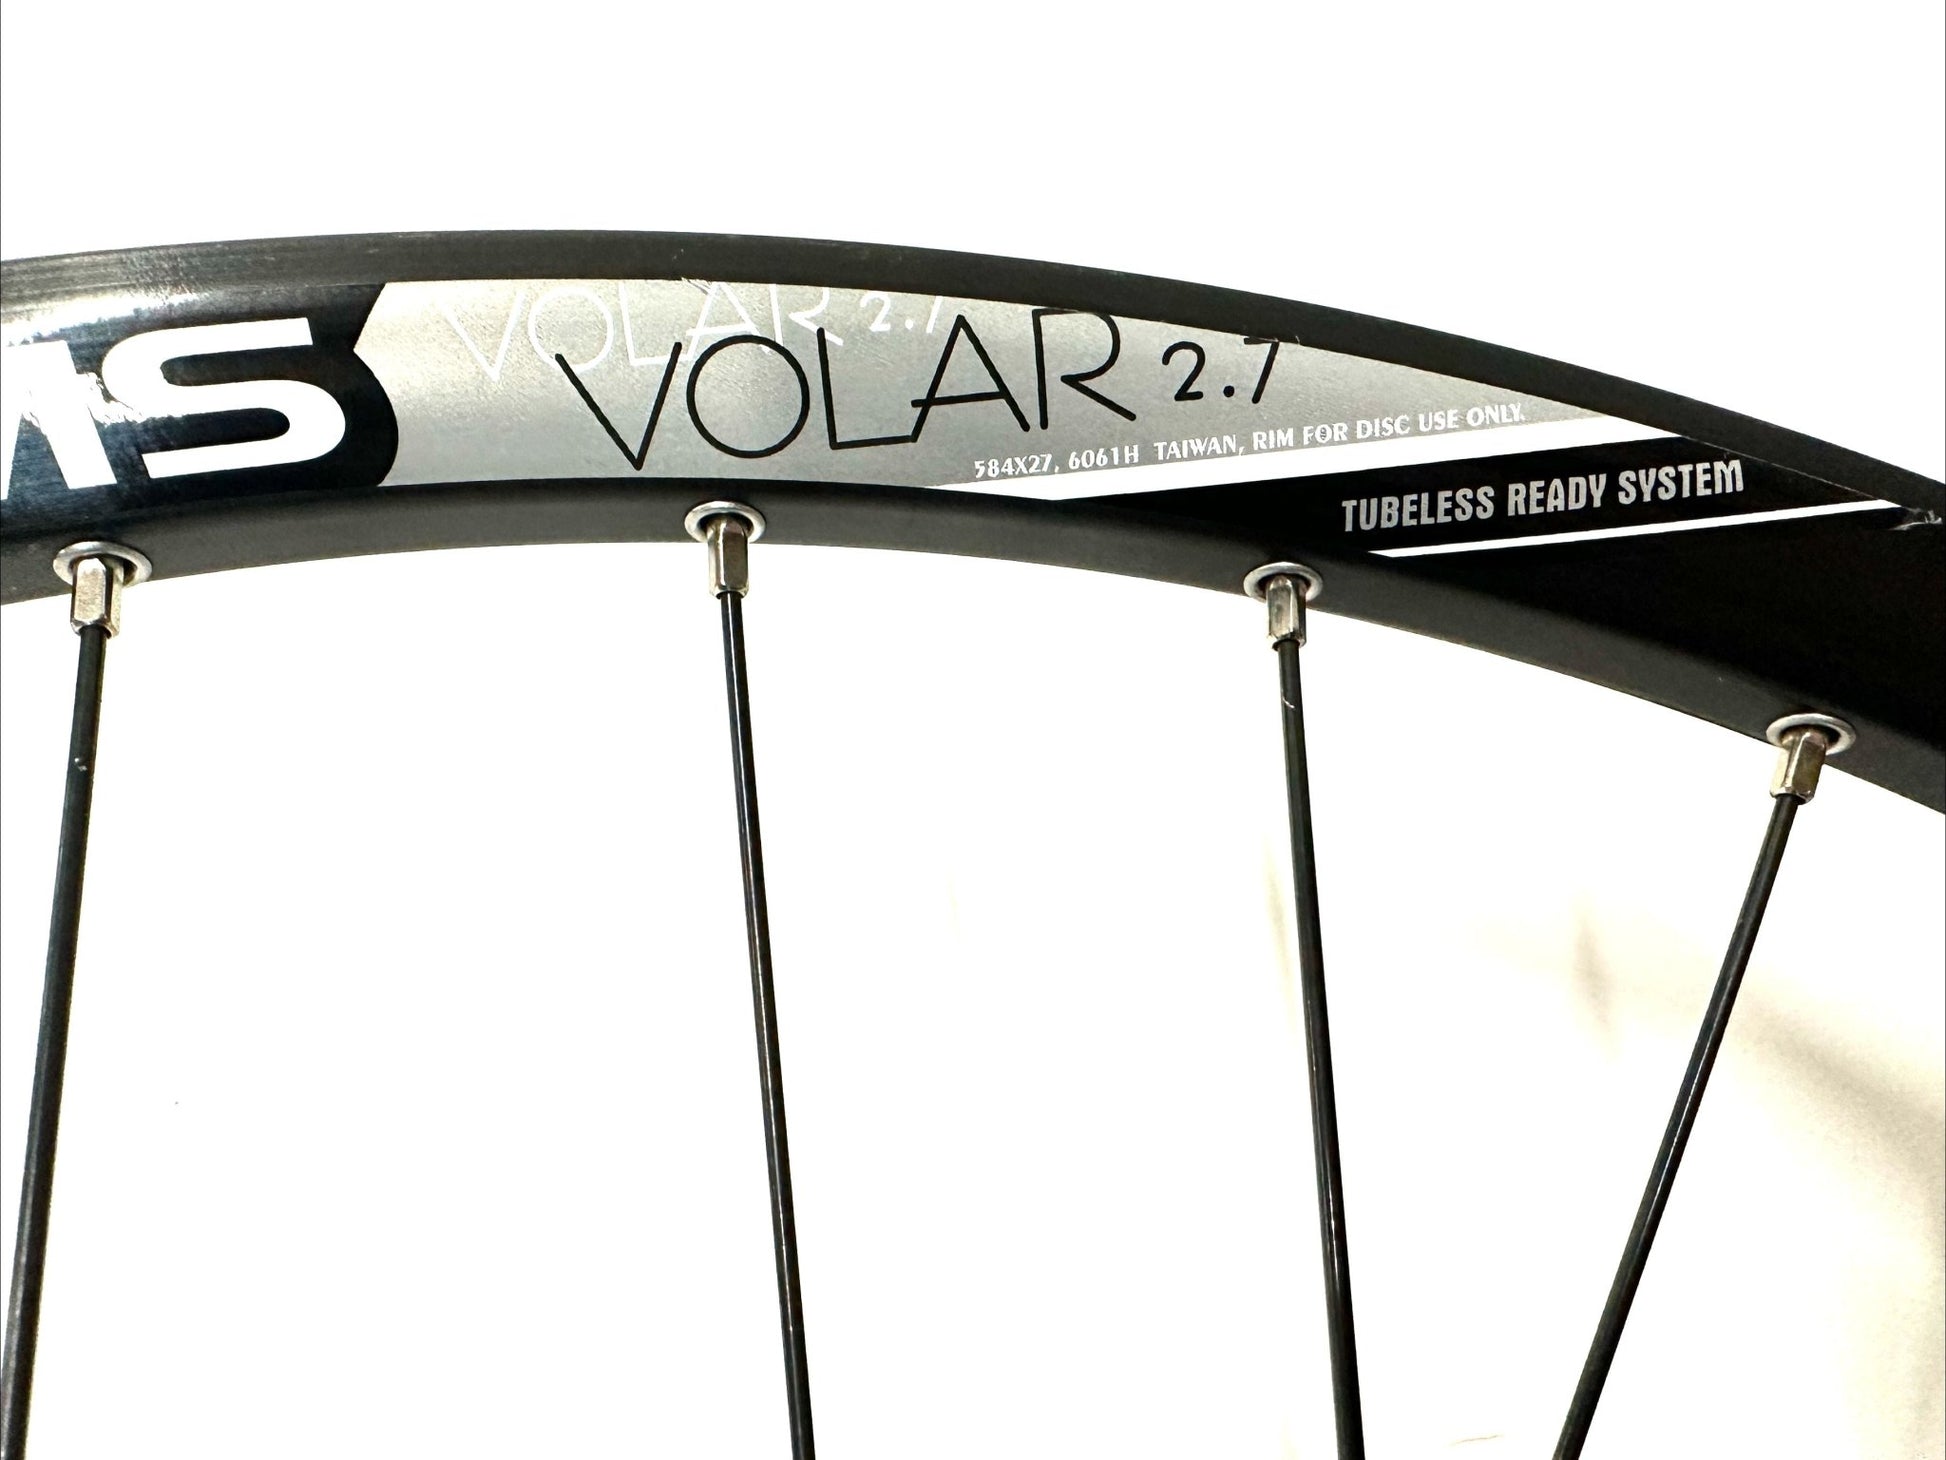 Alexrims Volar 2.7 27.5" BOOST 110x15 148*12 Rear HG 8-10 Disc 32h Wheelset New - Random Bike Parts